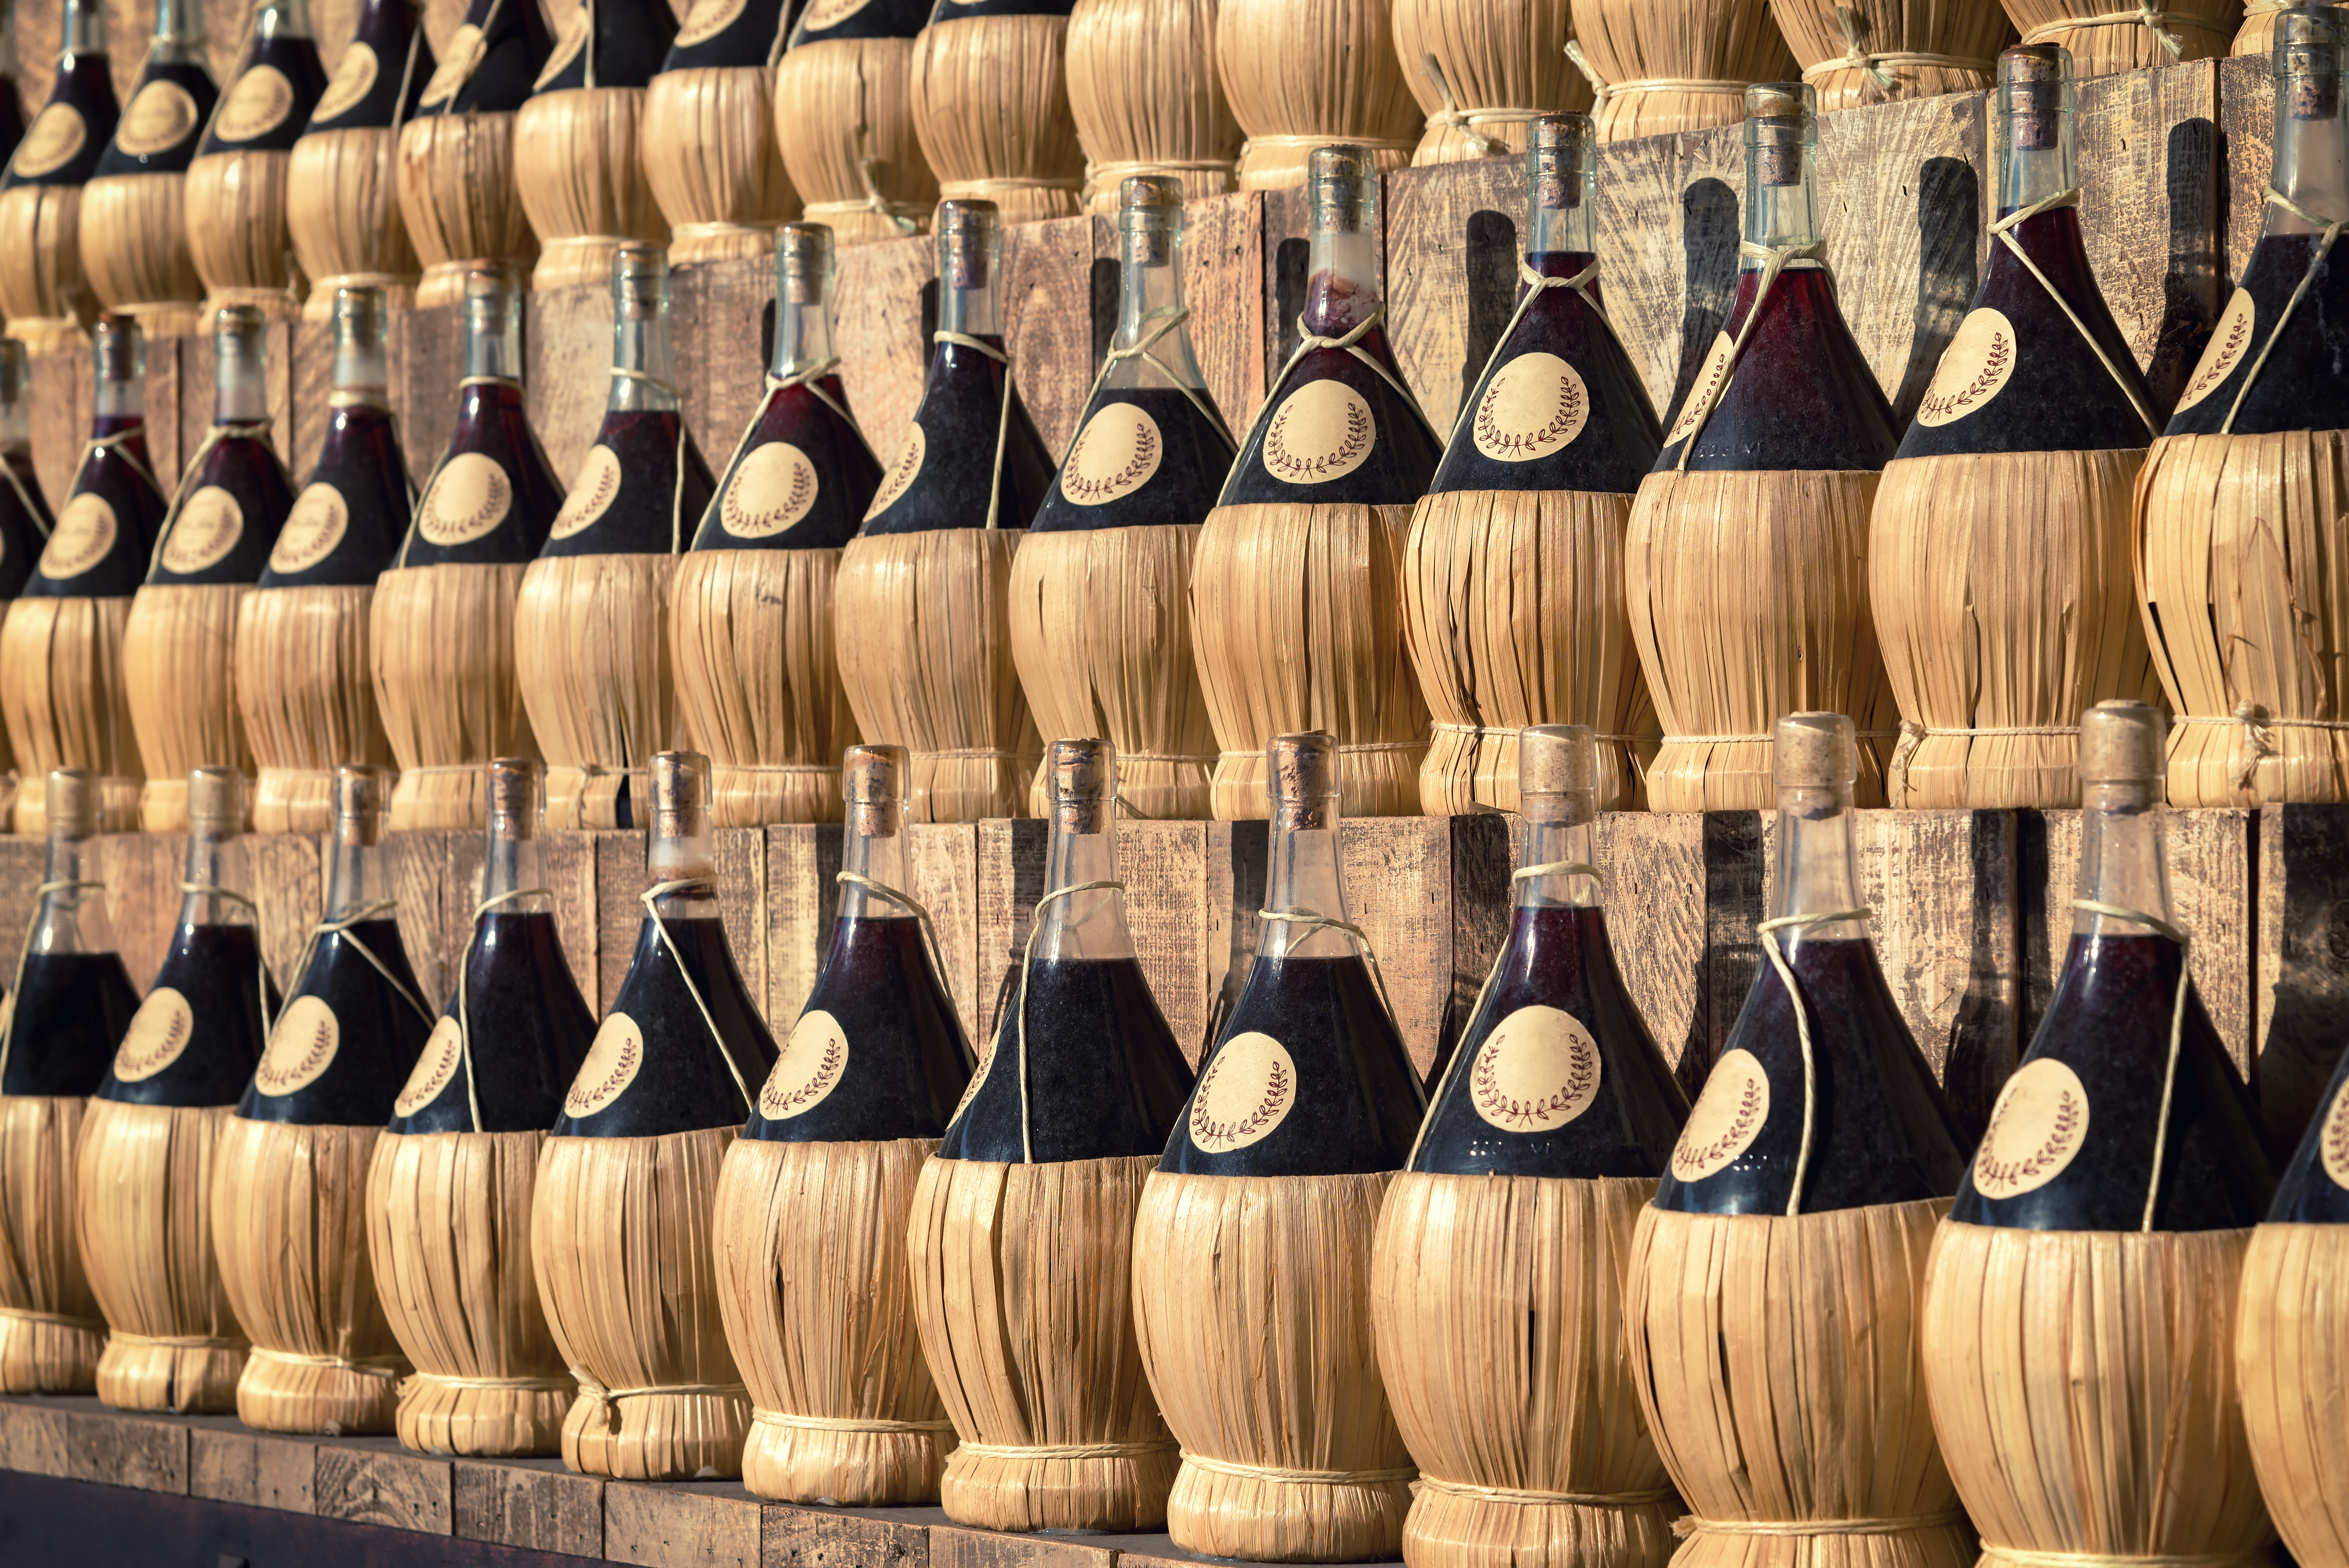 Italian Chianti Classico wine bottles on a shelf